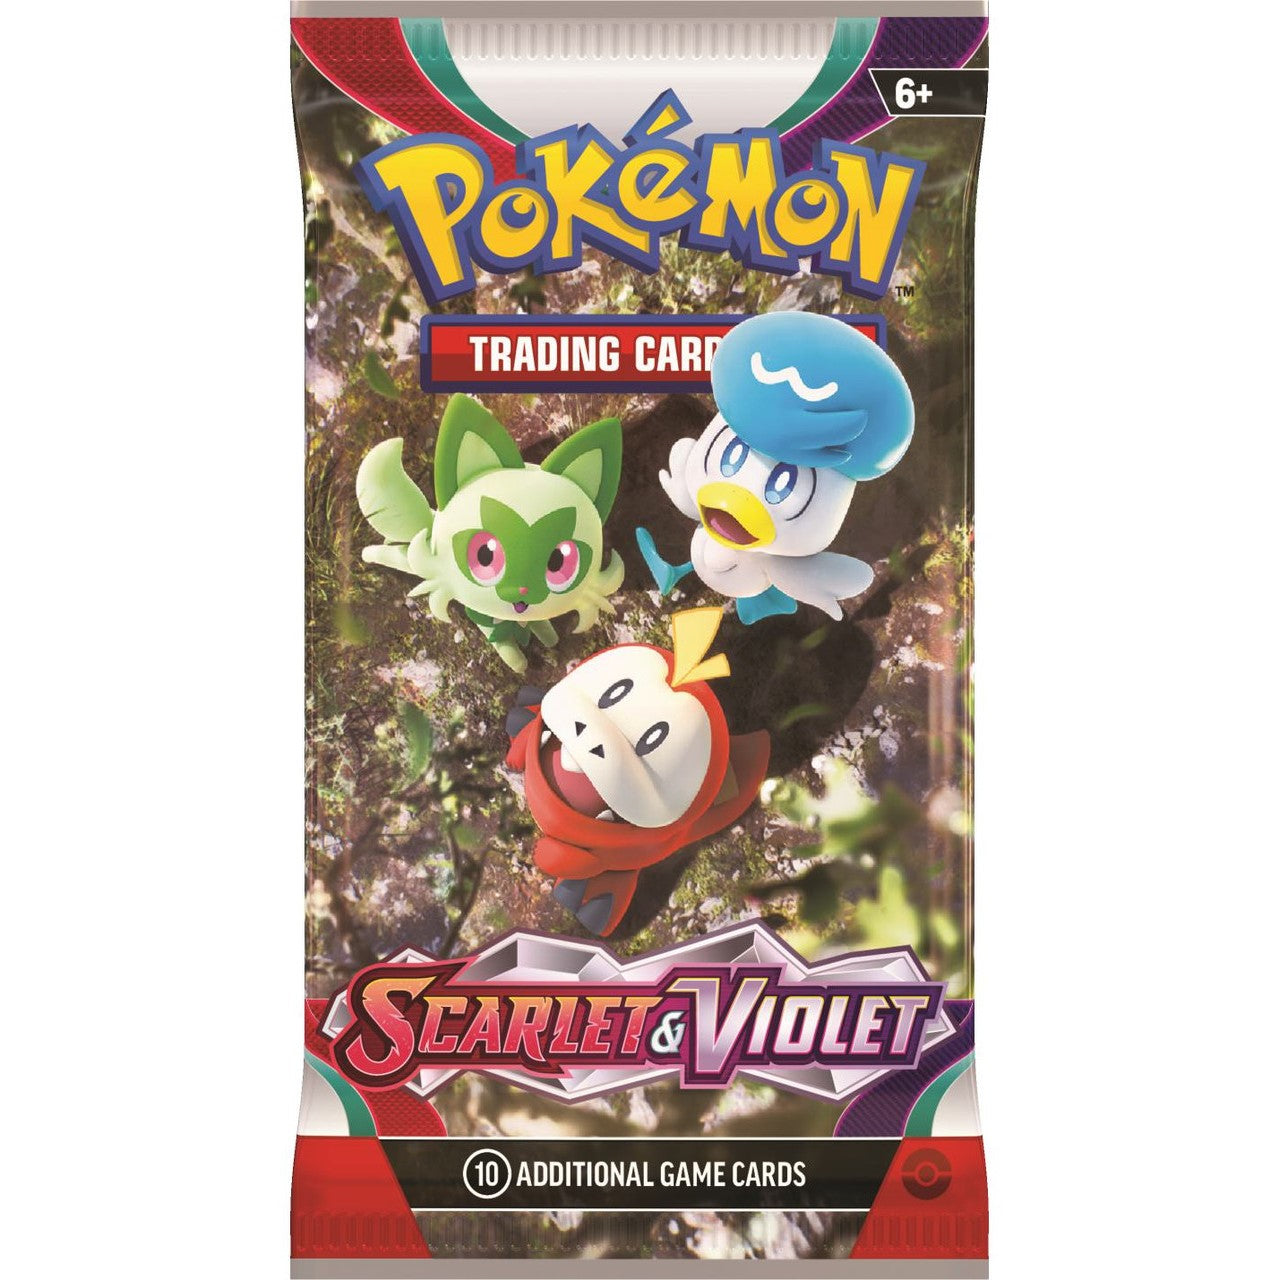 Pokémon TCG: Scarlet and Violet Booster Pack